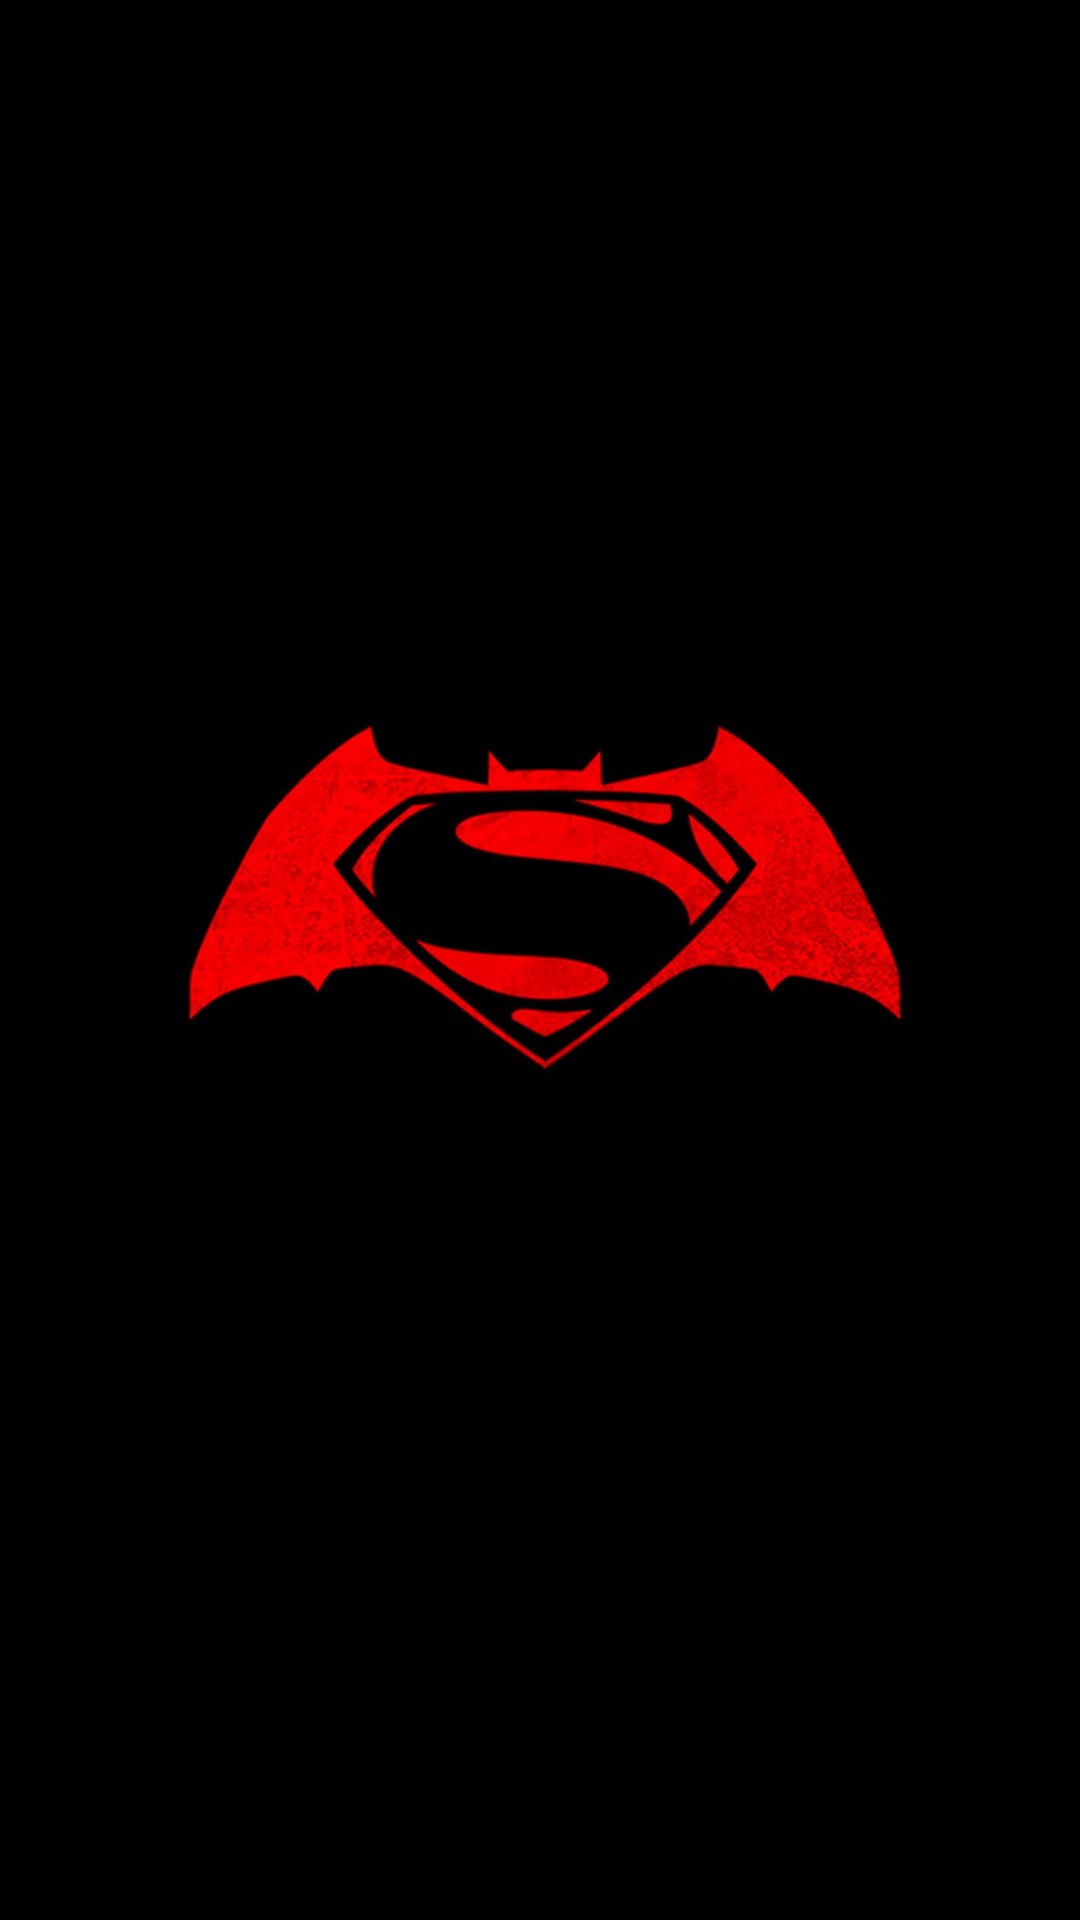 Batman v Superman logo Wallpaper for SAMSUNG Galaxy Note 3